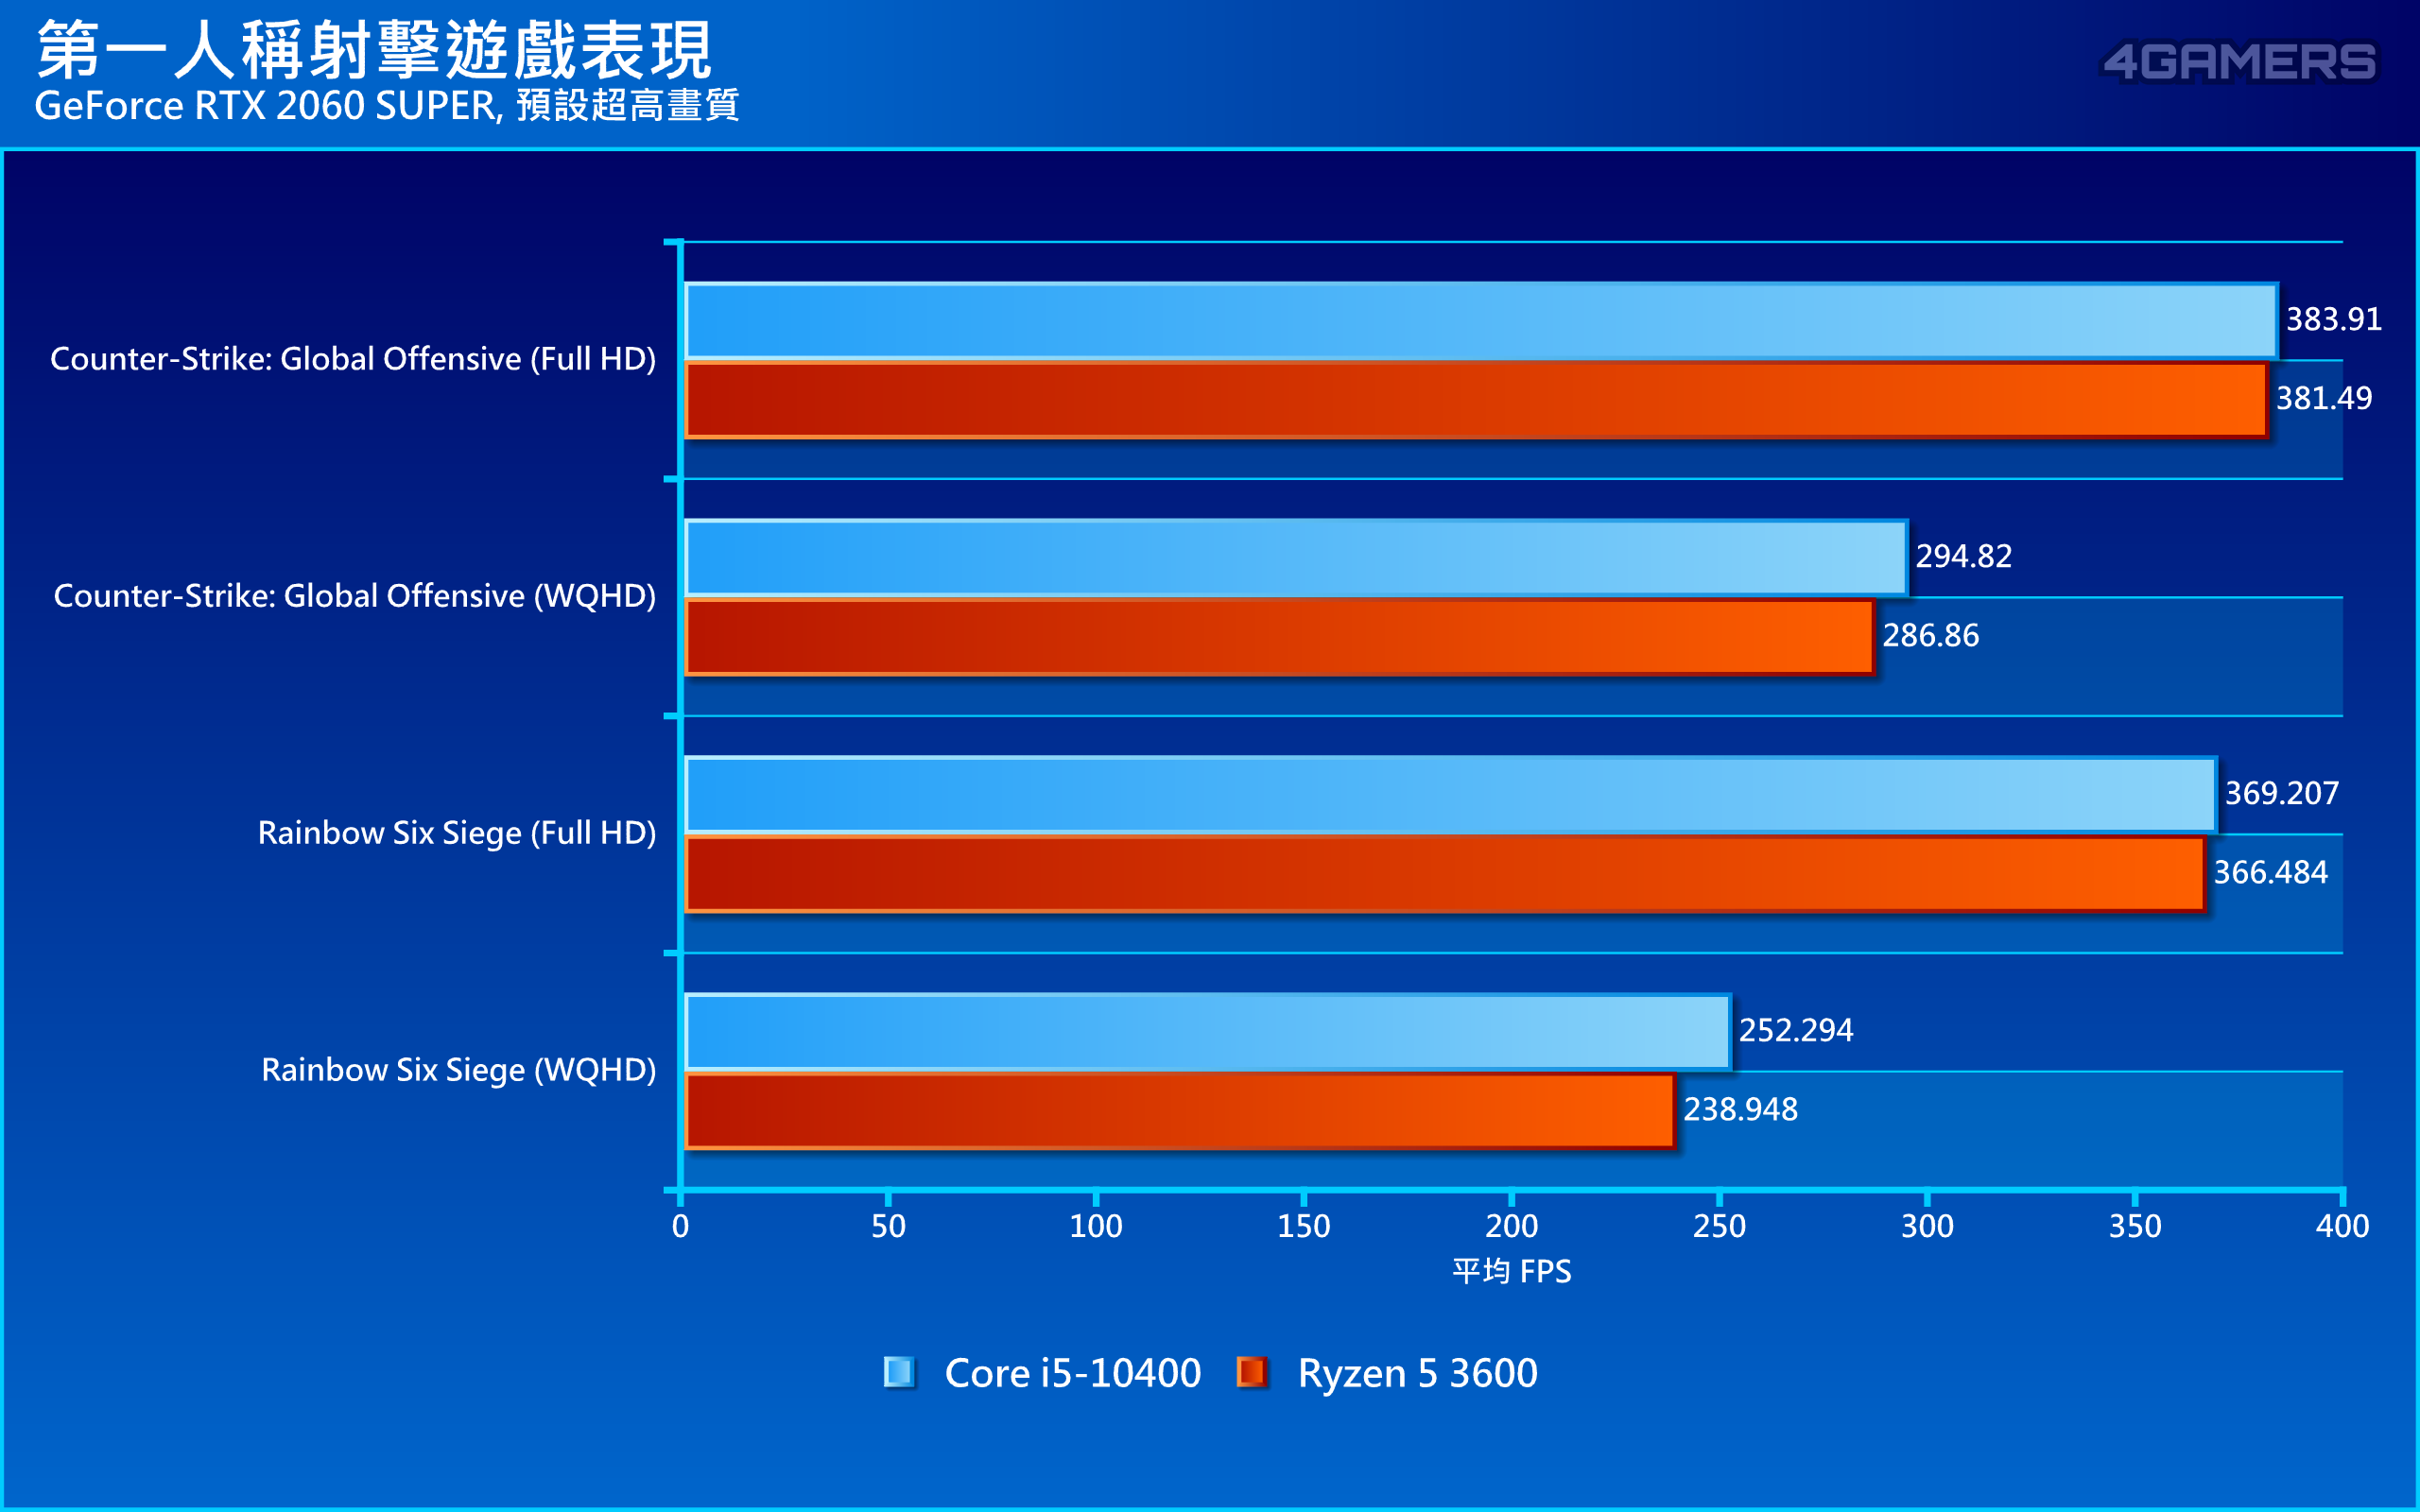 Intel Core i5-10400 v.s. AMD Ryzen 5 3600